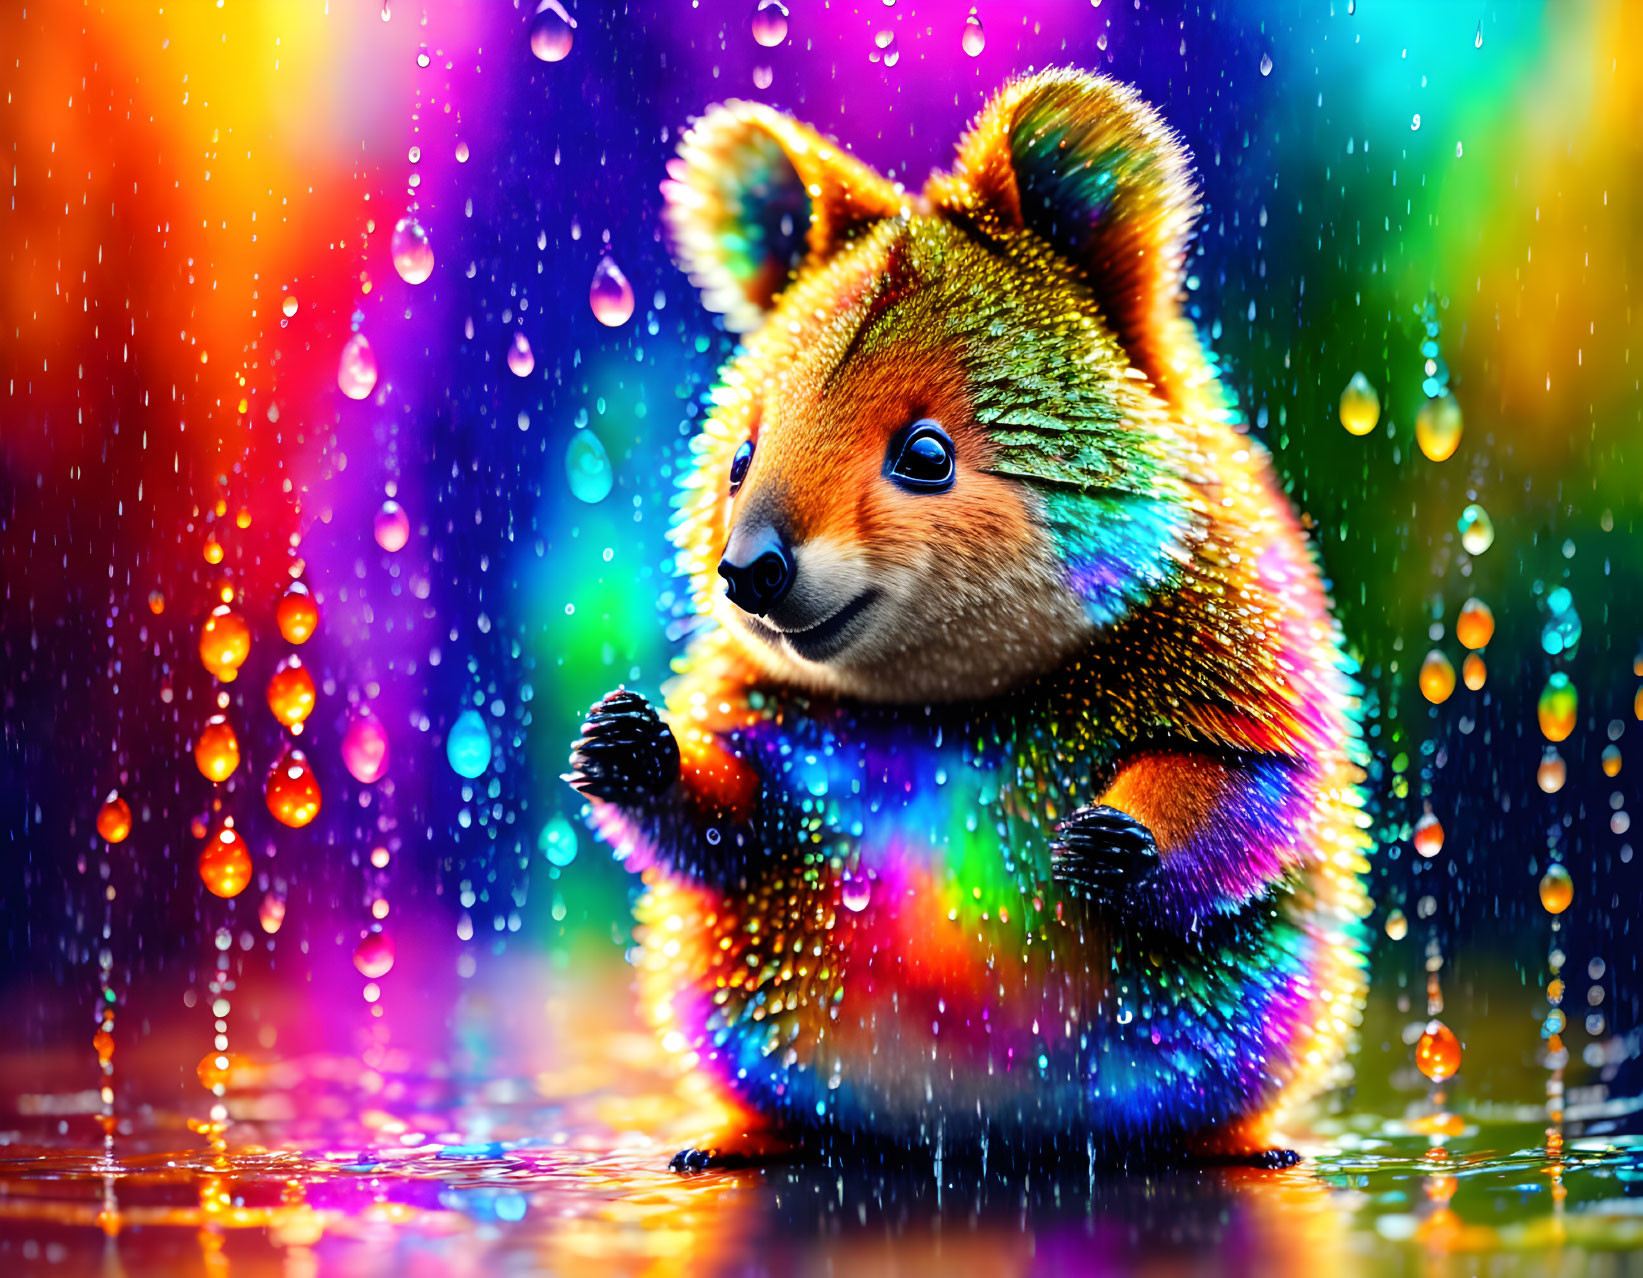 Colorful Digital Artwork: Teddy Bear Creature in Raindrop Scene